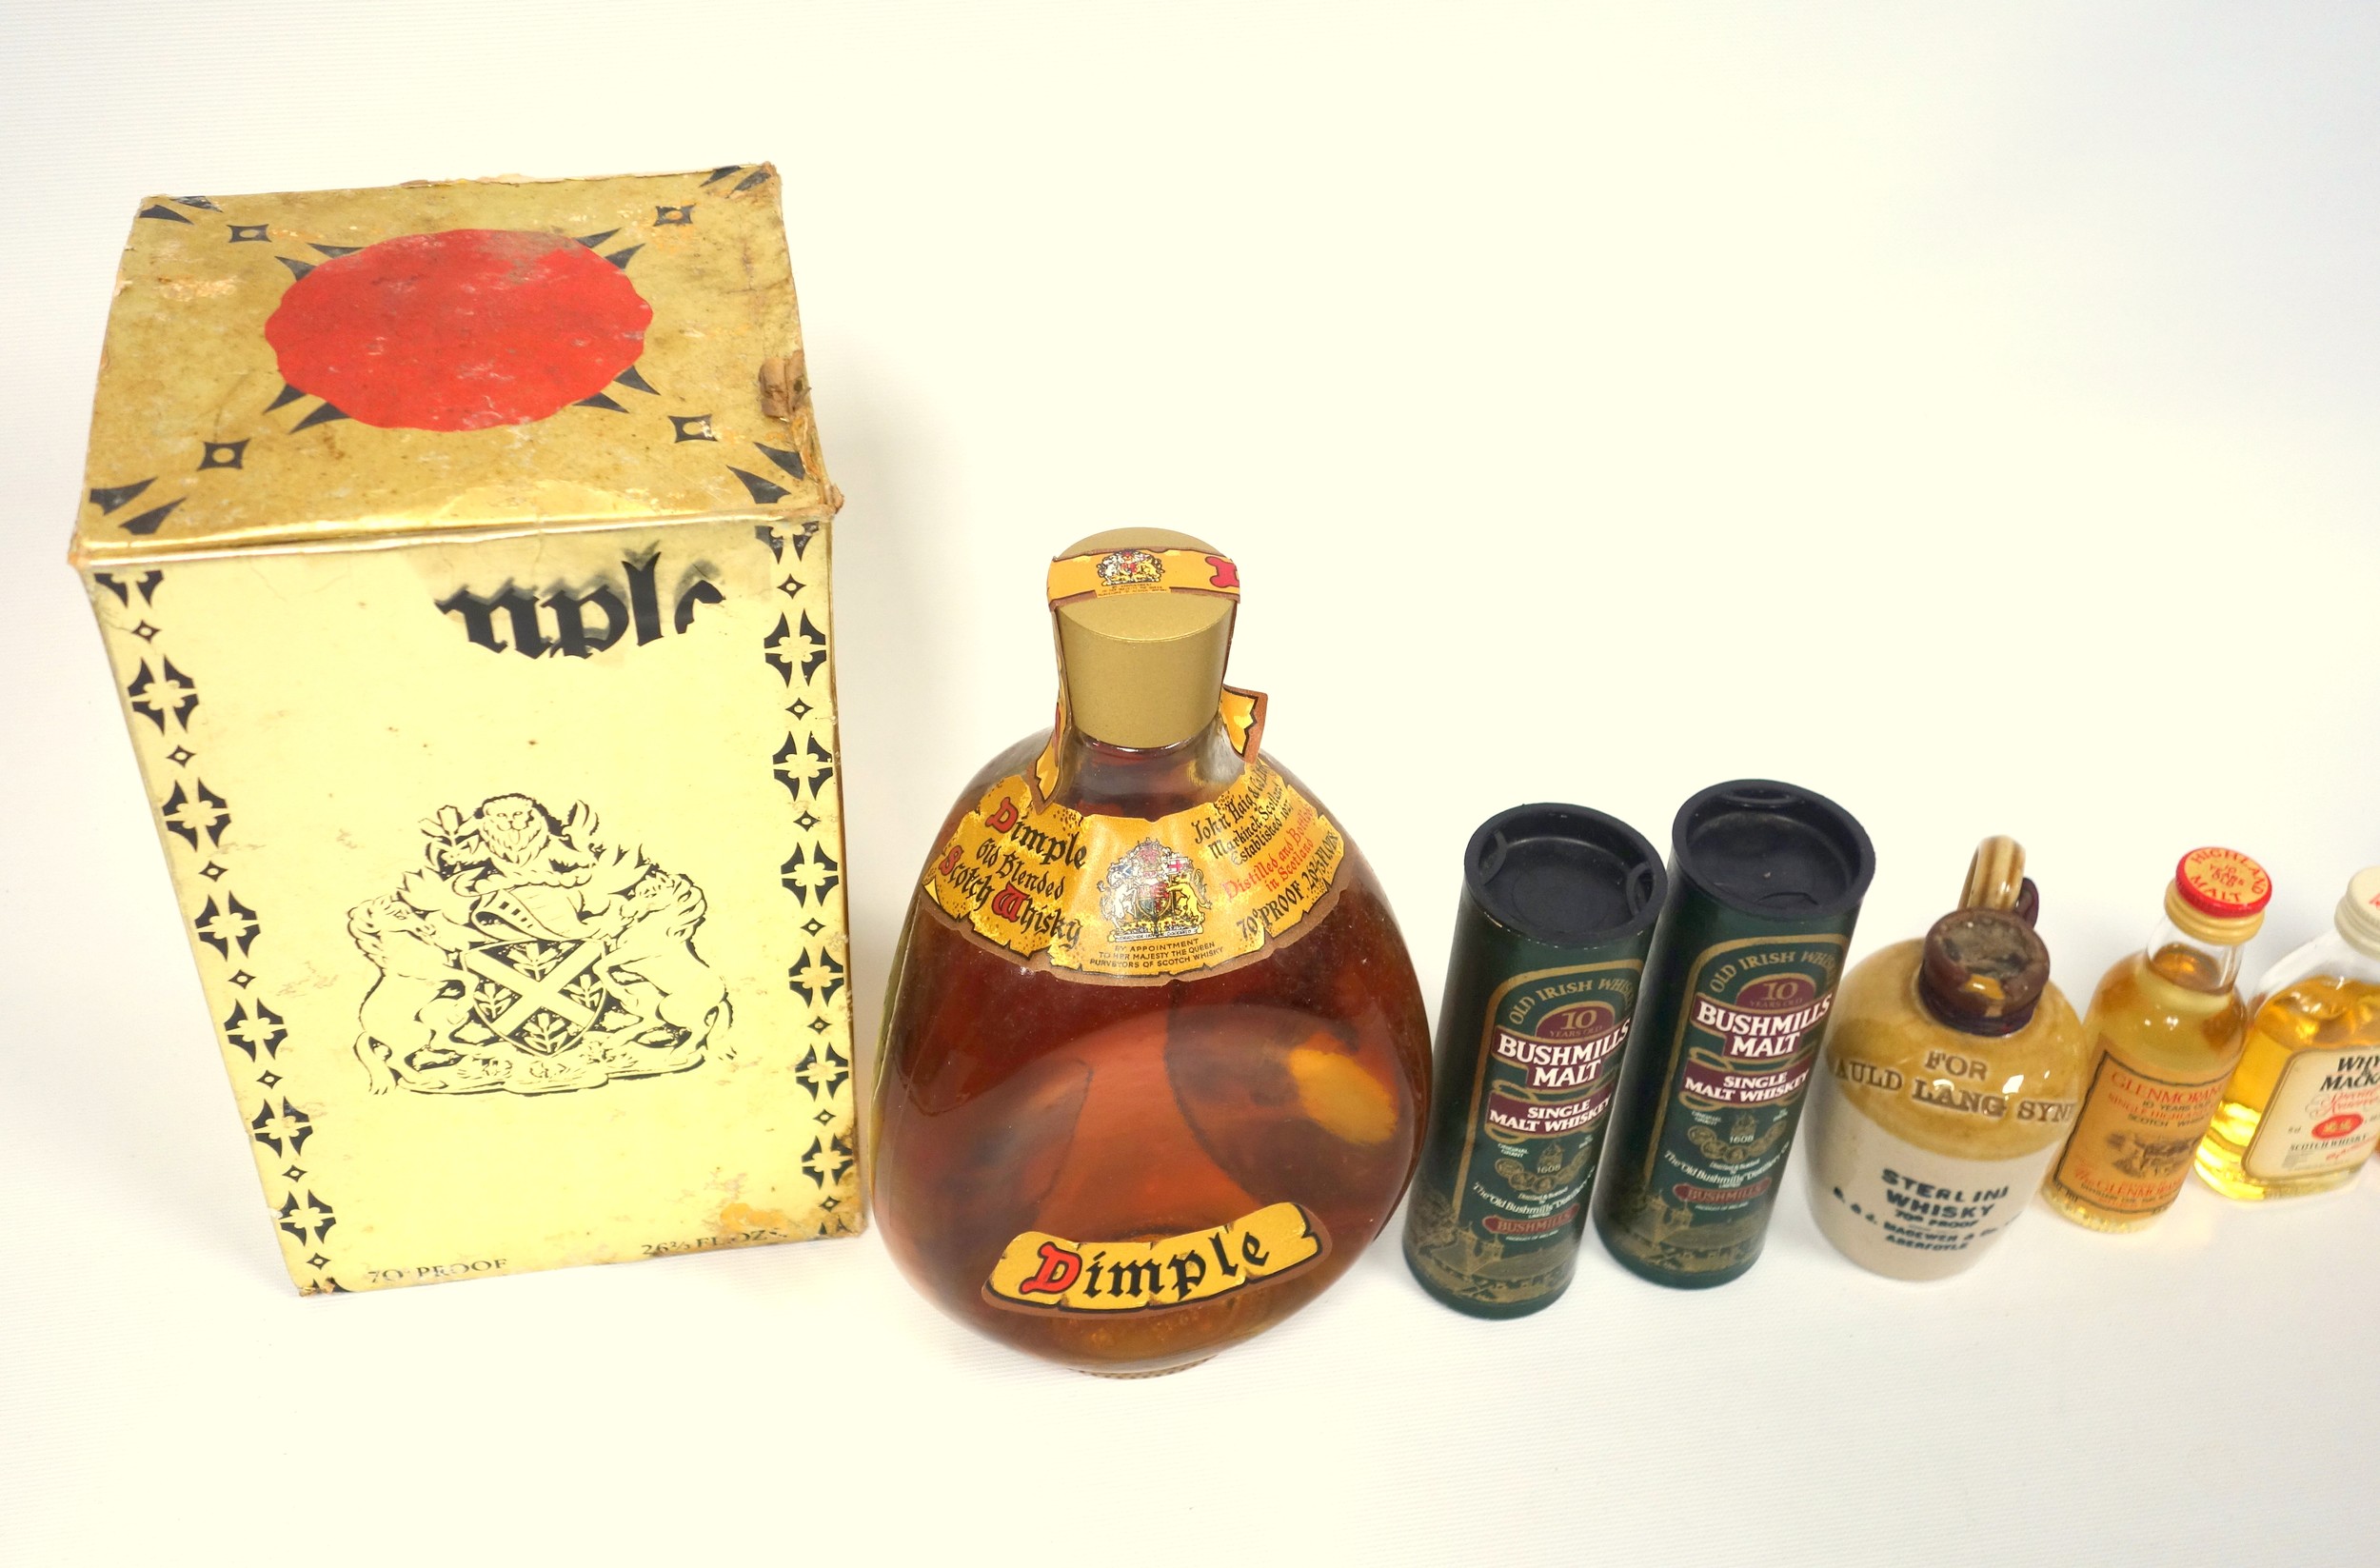 Bottle of Haig's 'Dimple' old blended Scotch whisky, 26 2/3 Fl. Ozs., 70 proof, old label - Image 2 of 3